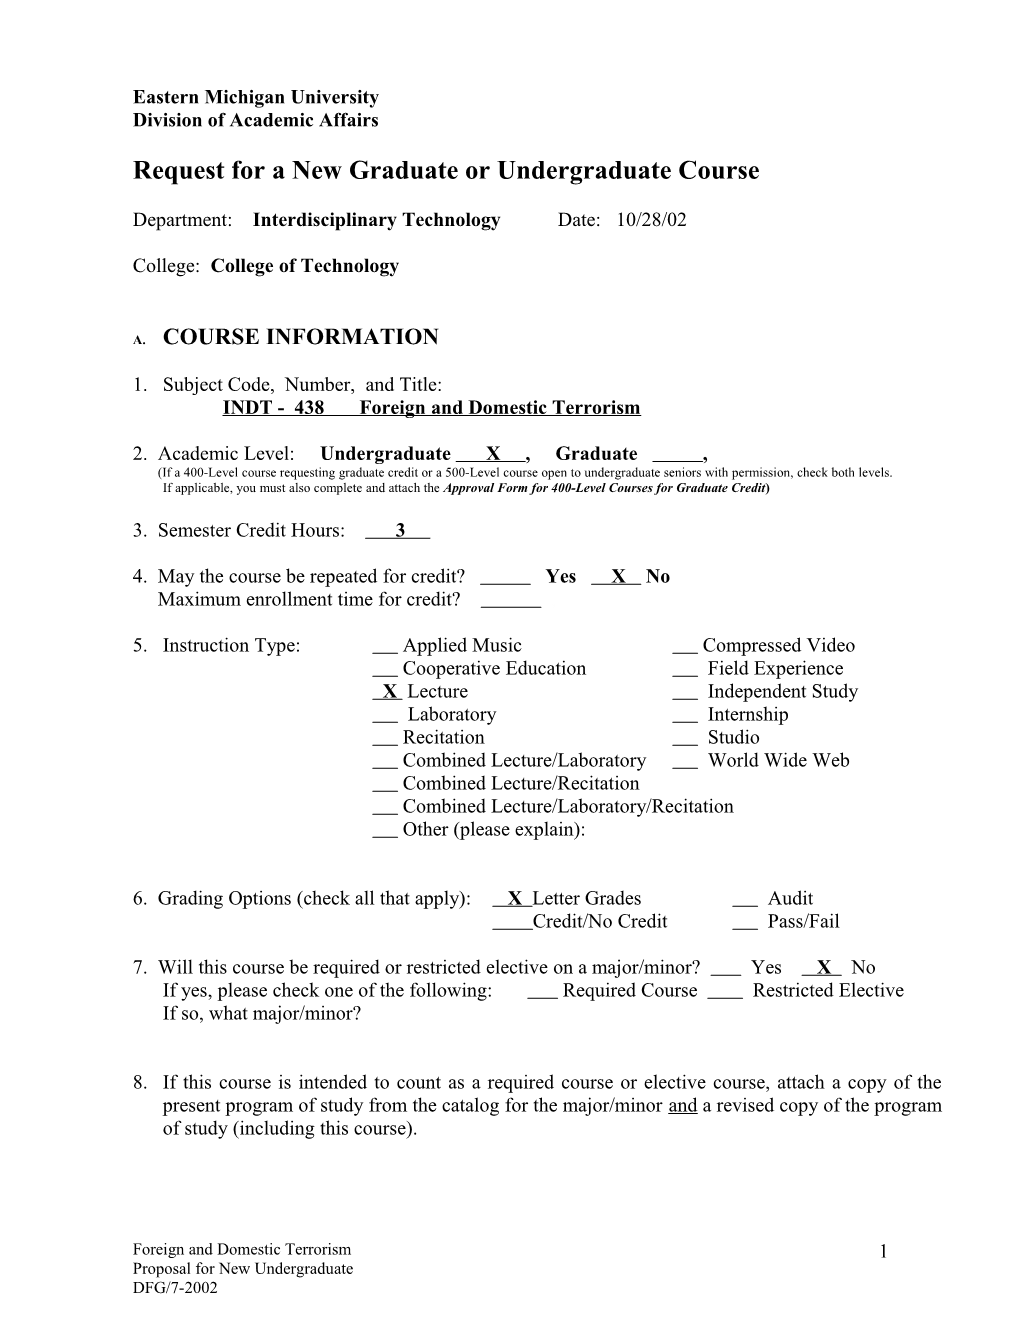 Request for a New Graduate Or Undergraduate Course